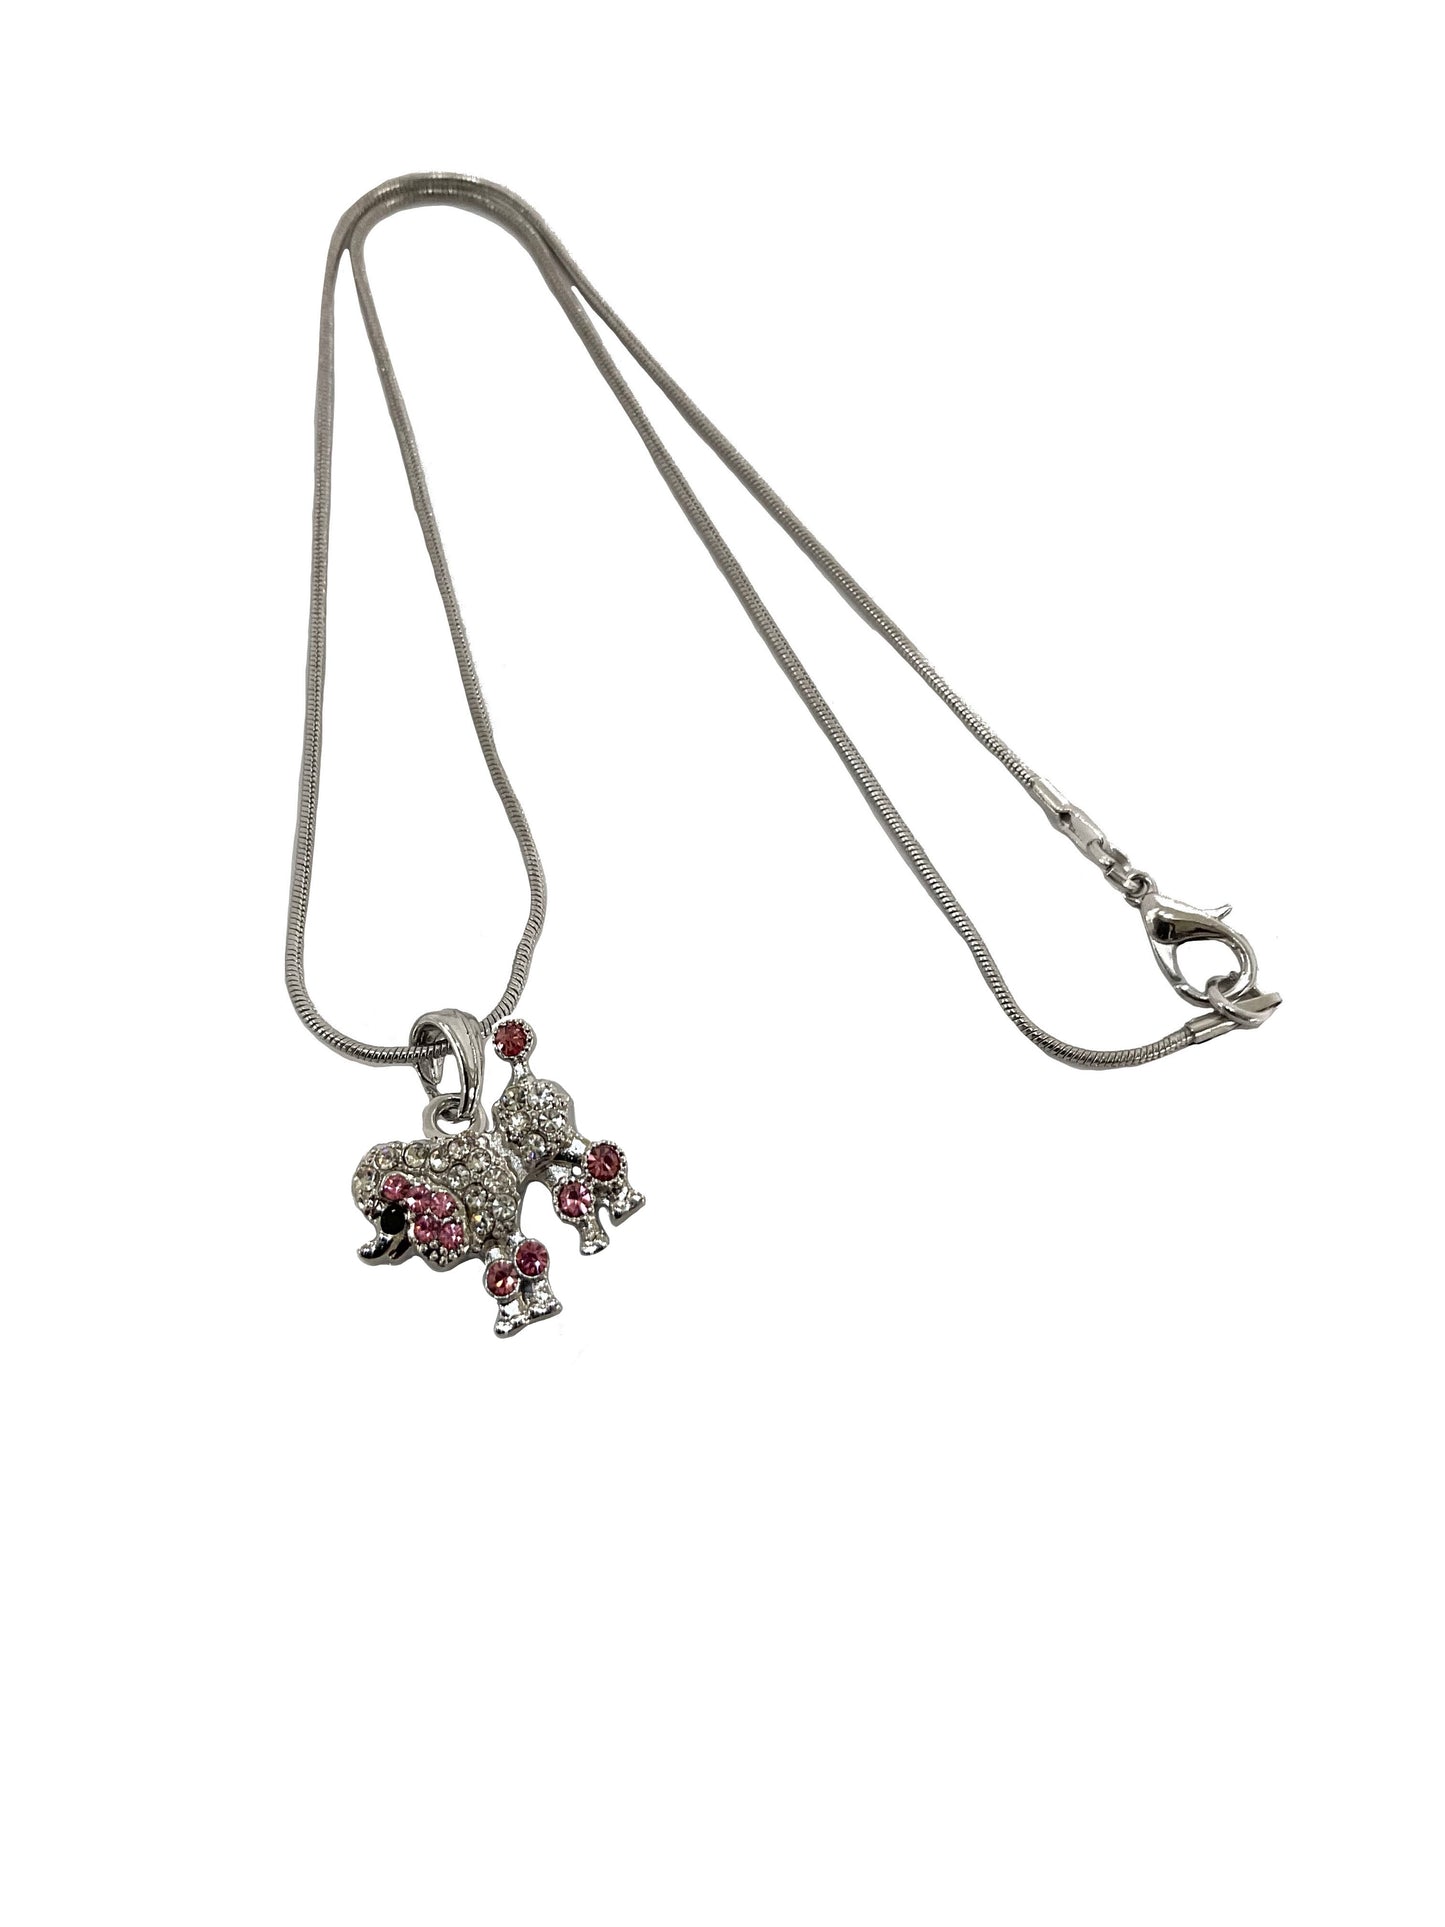 Poodle Dog Necklace #27-1326